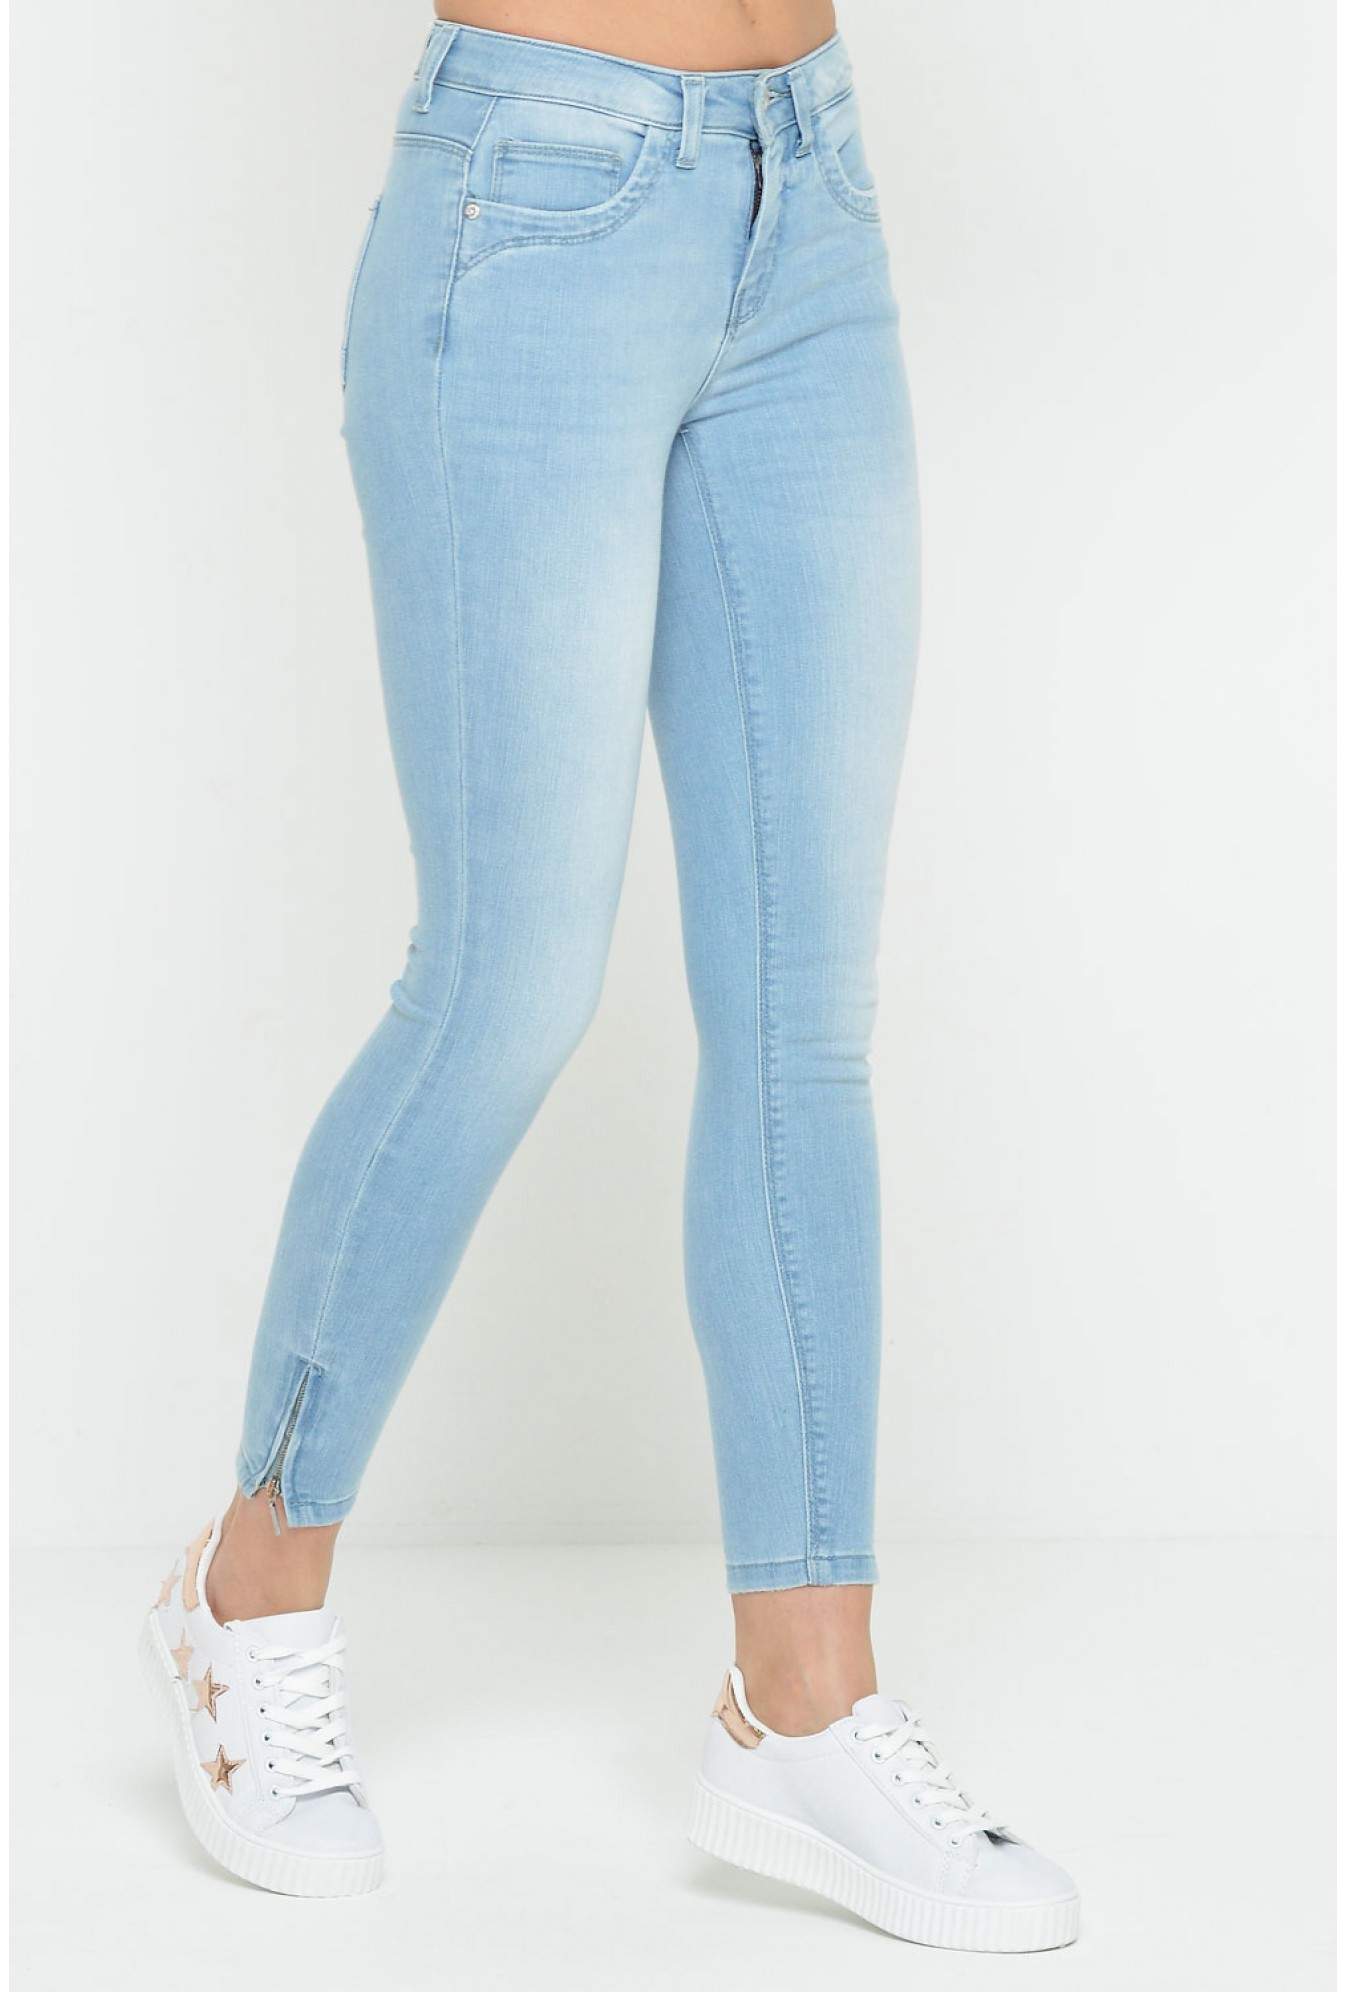 light blue ankle jeans